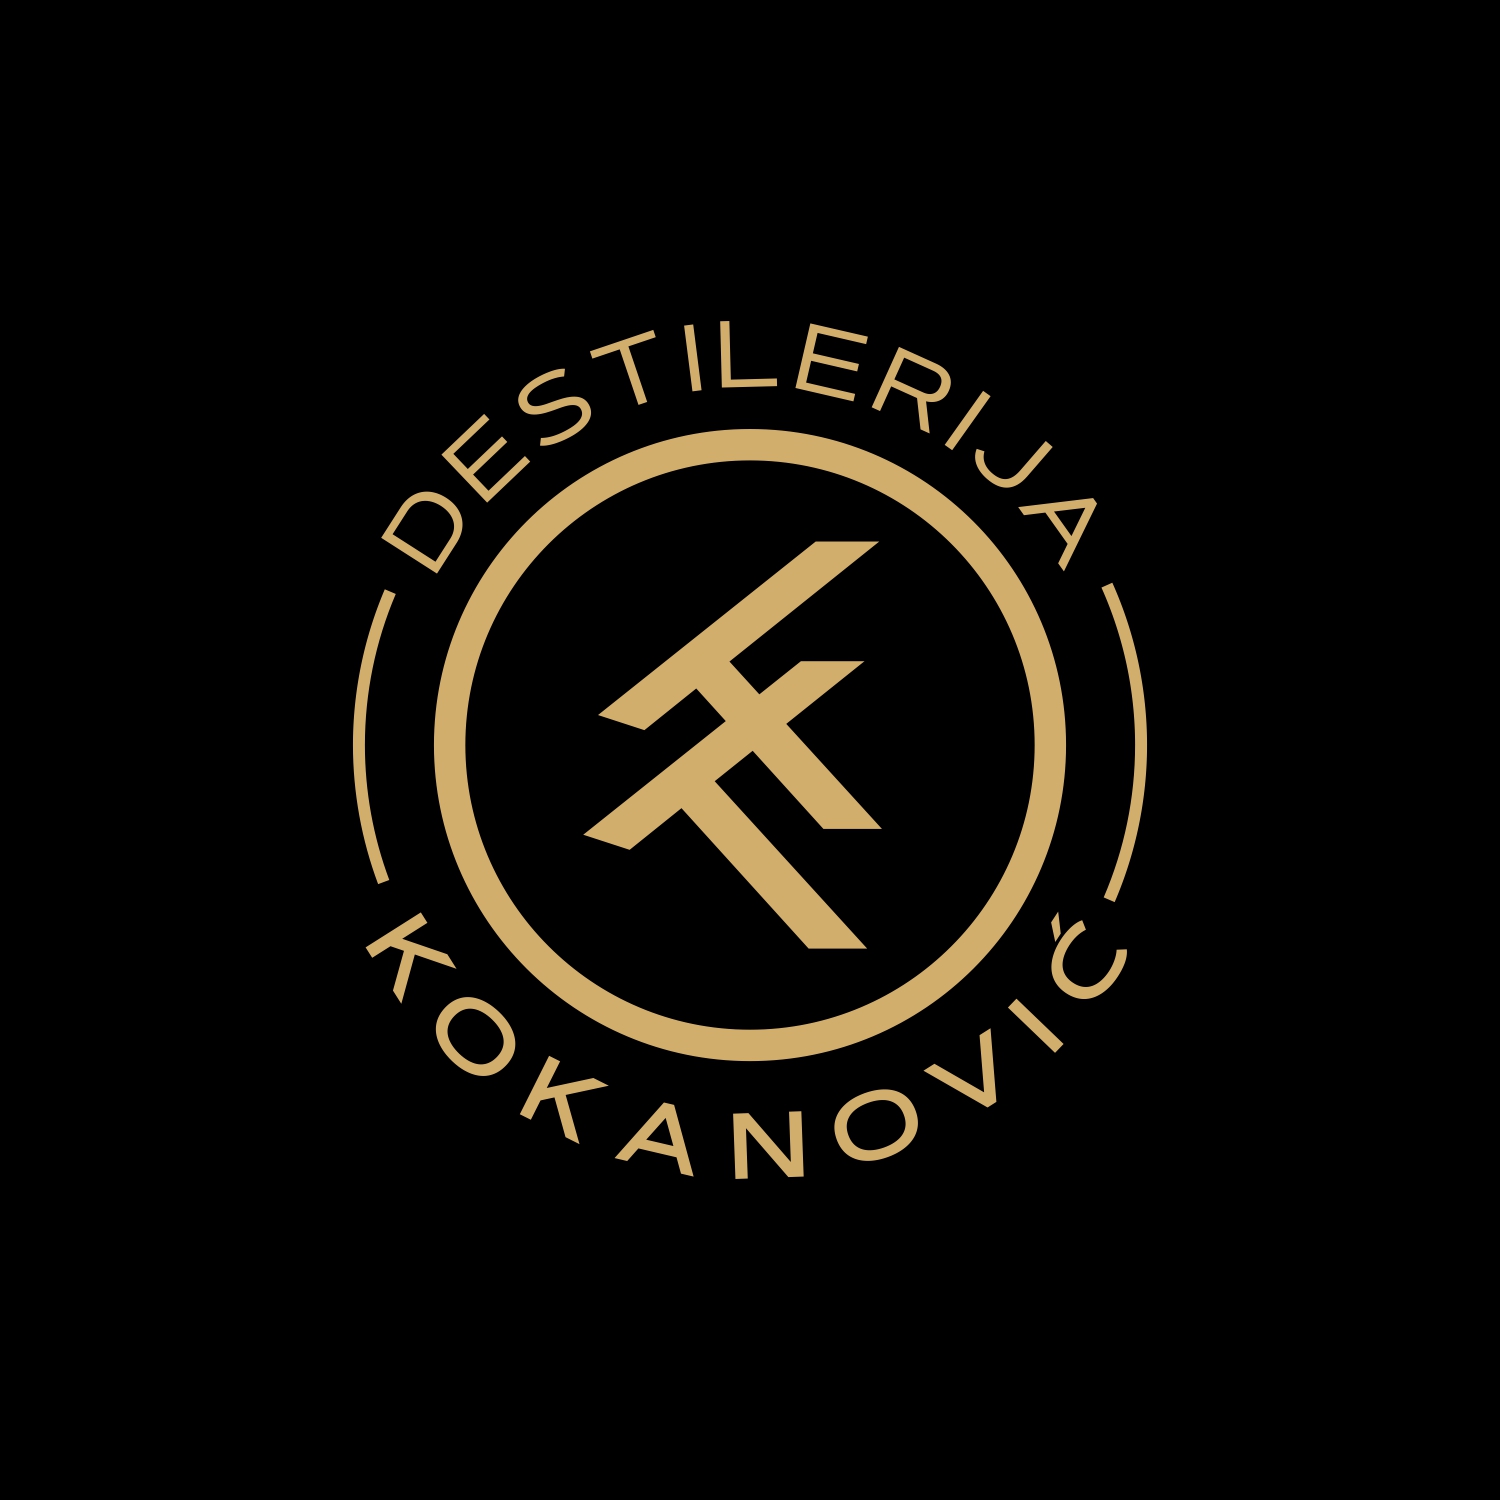 Distillery Kokanovic